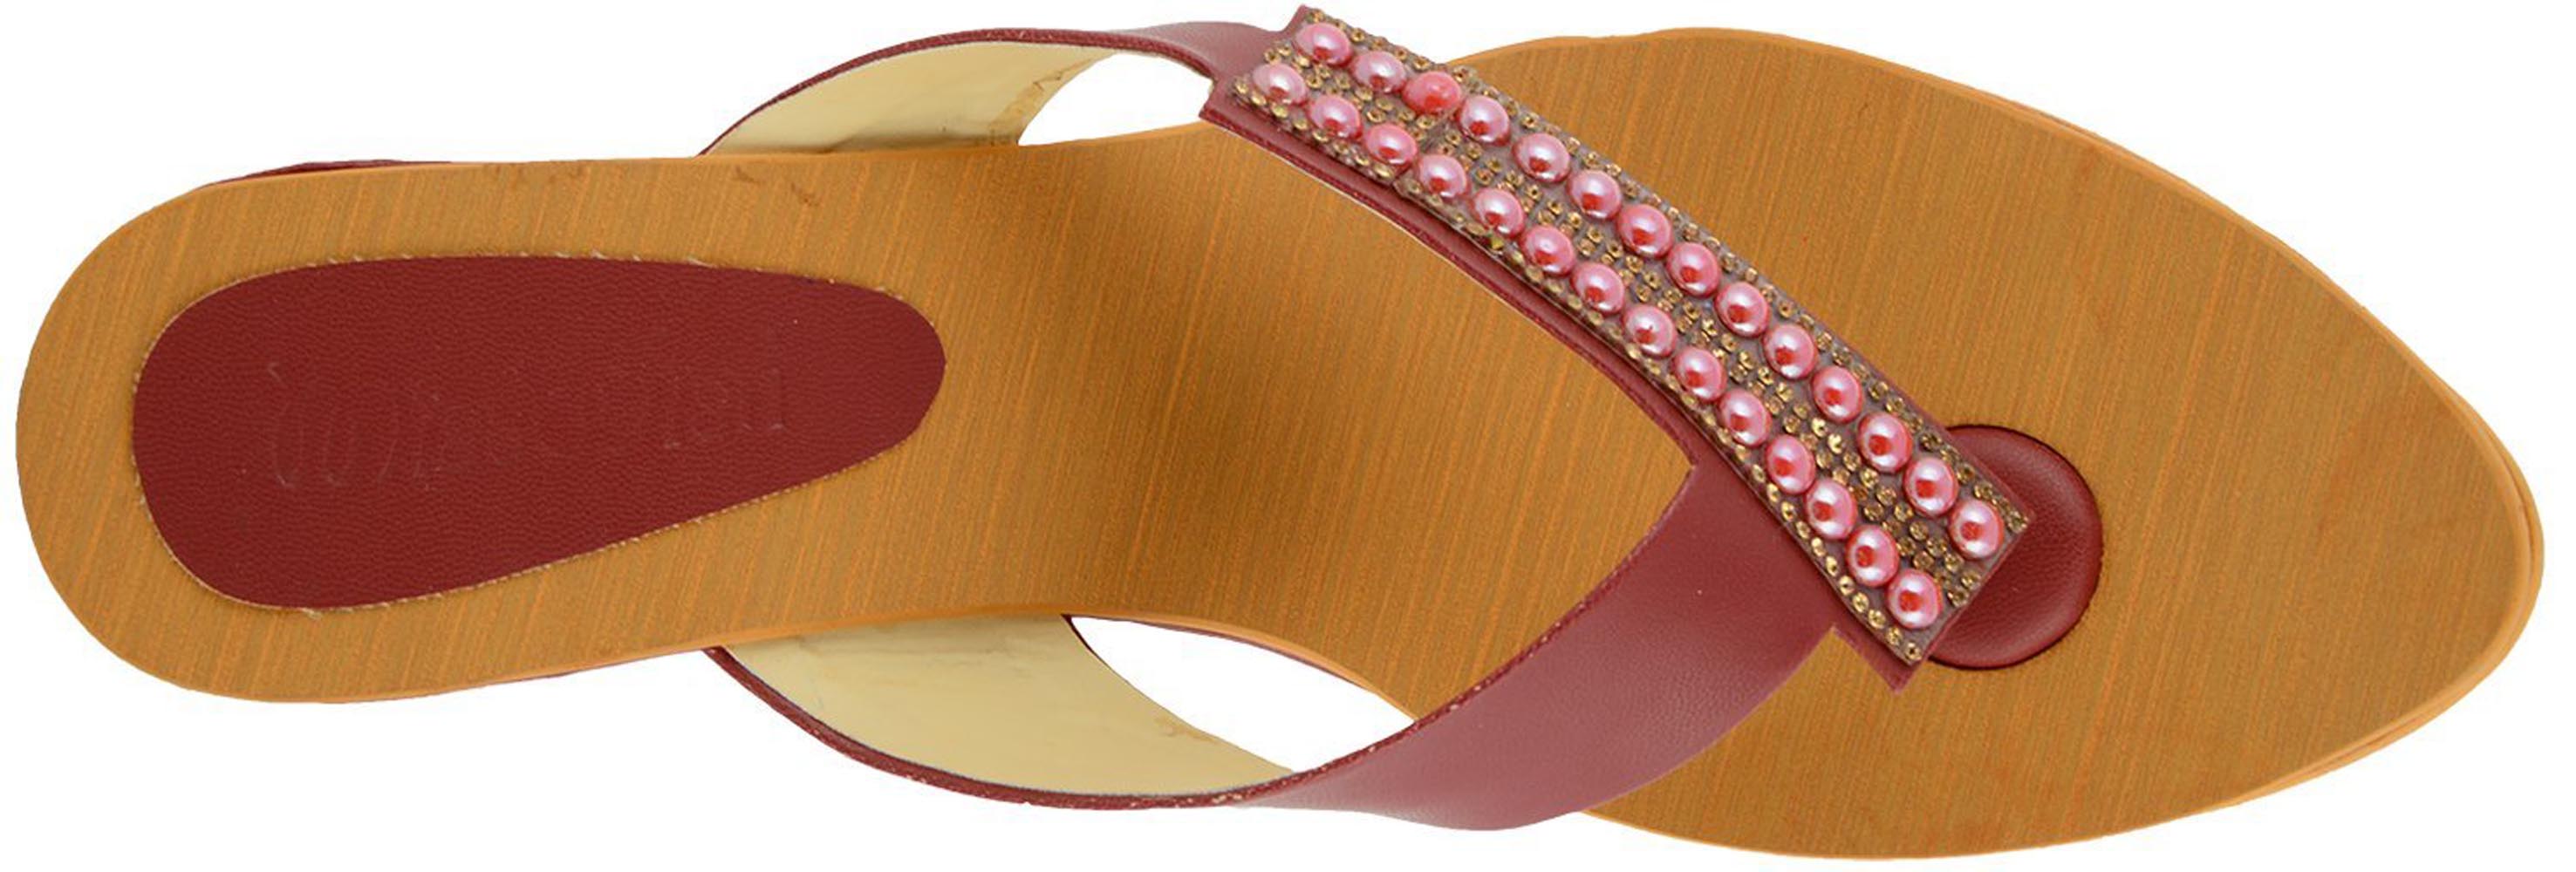 Buy Footgear Sandals(L-SA-C-5) Online @ ₹1499 from ShopClues